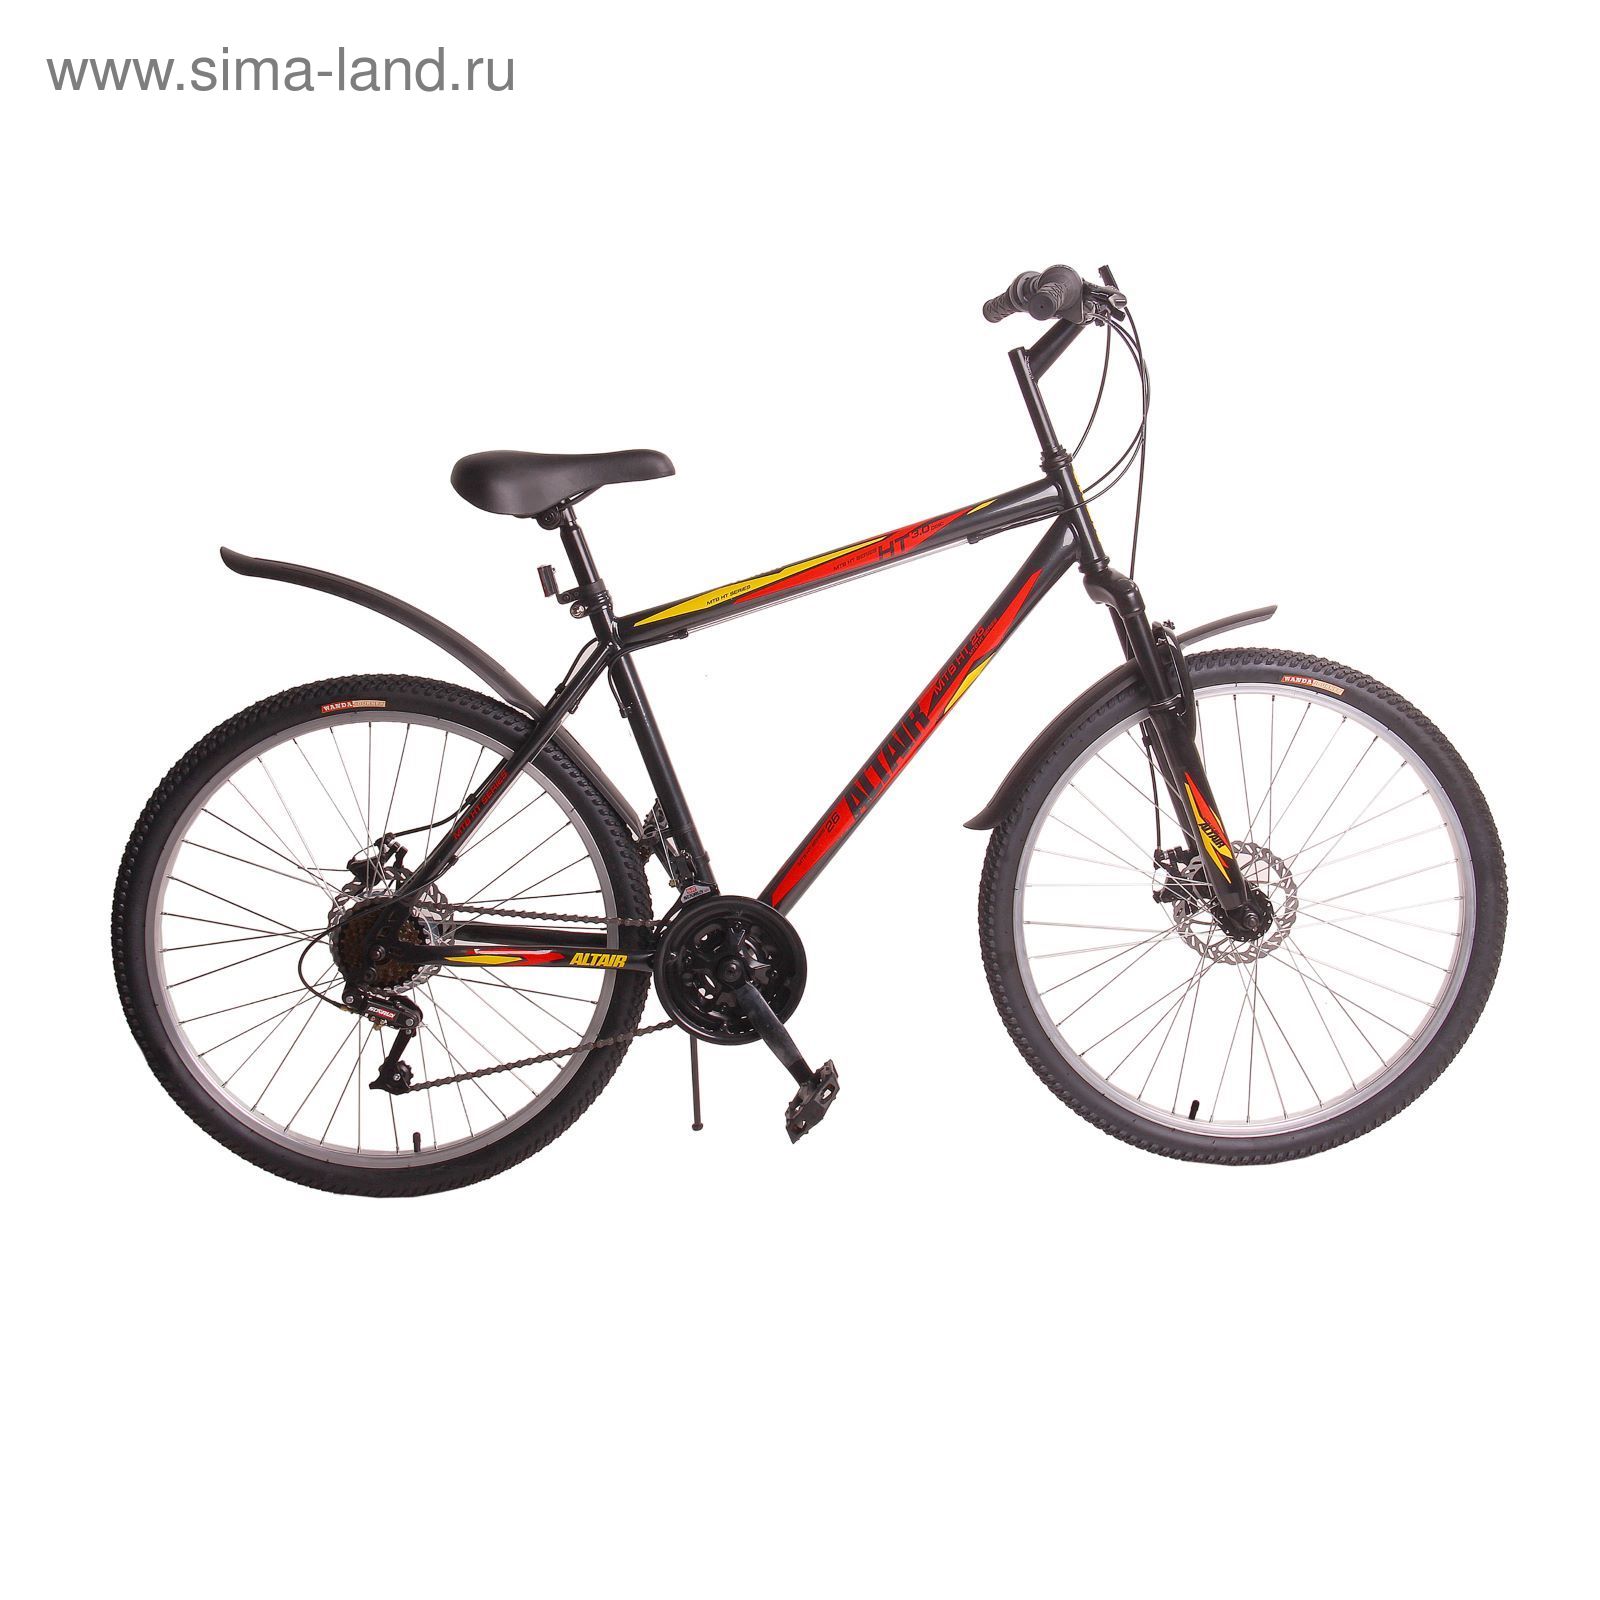 Велосипед 26" Altair MTB HT 3.0 disc, 2017, цвет черный, размер 17"